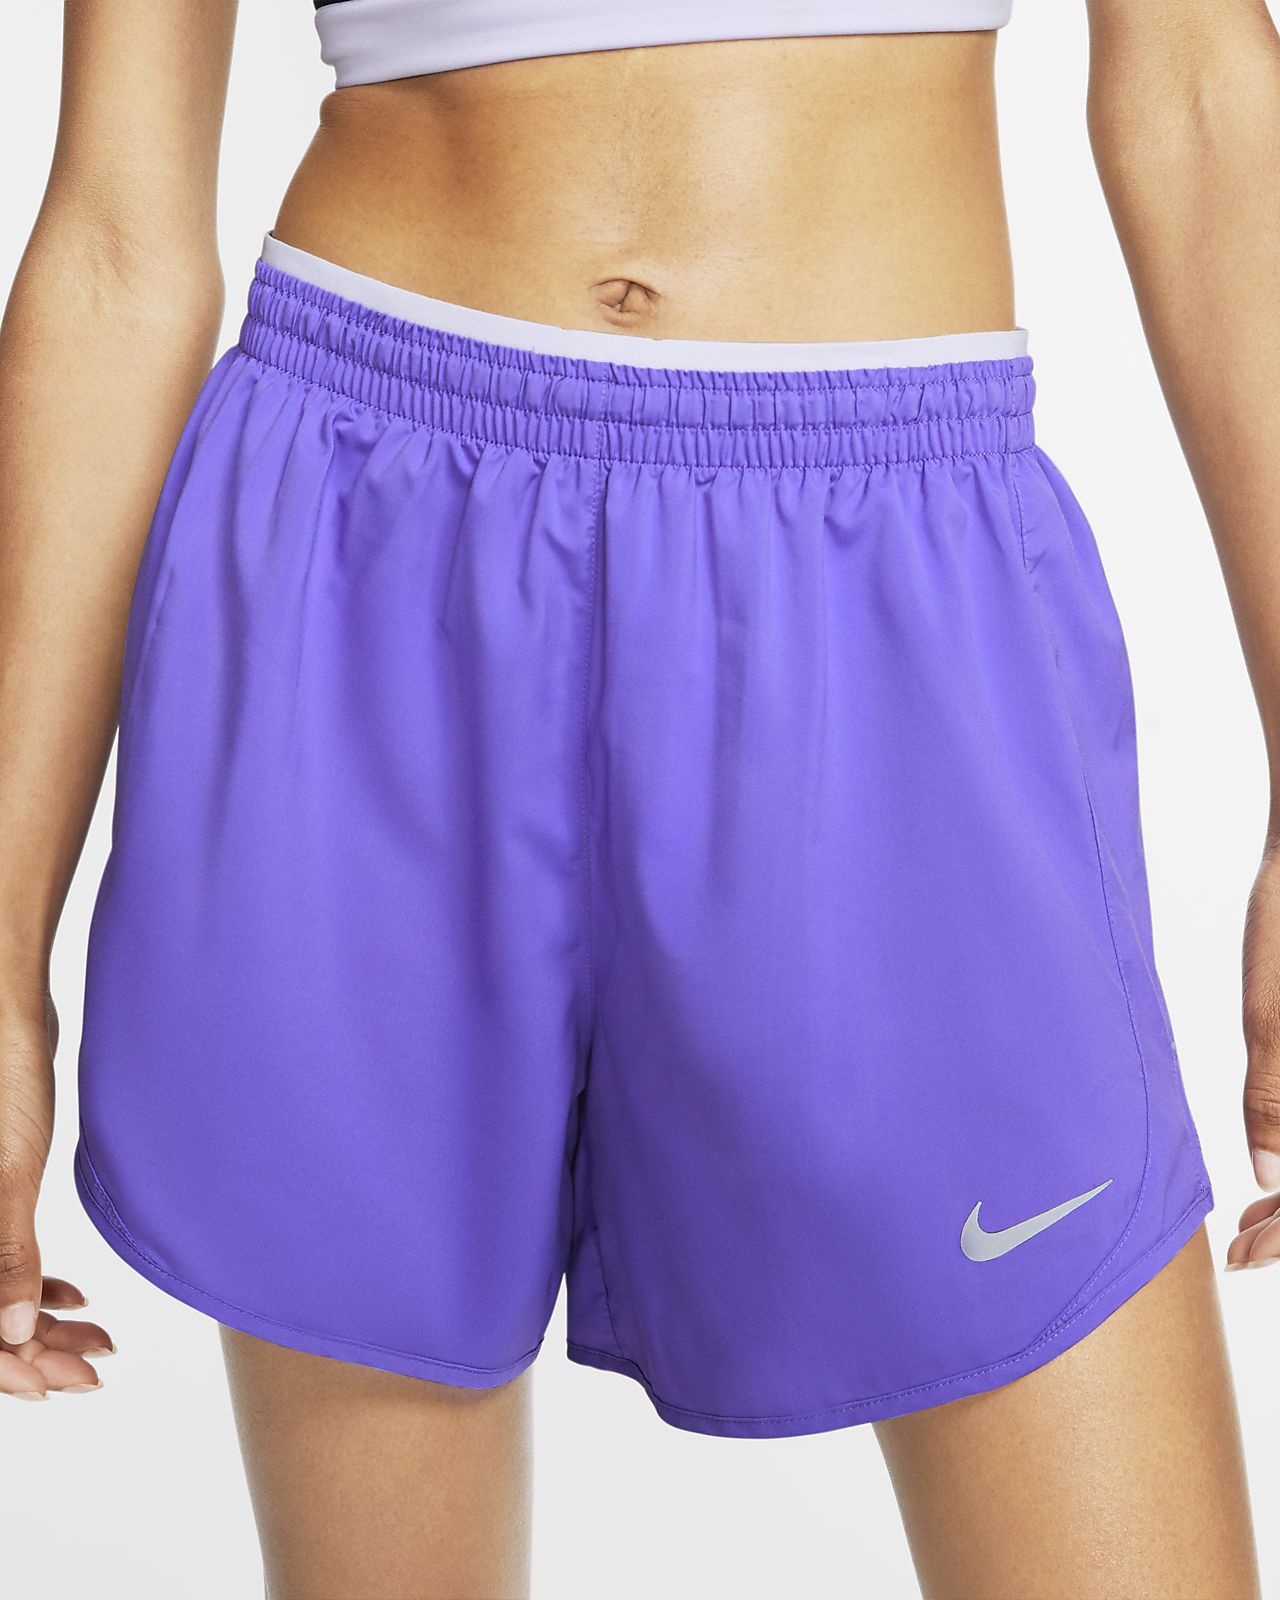 Nike Tempo Shorts Size Chart